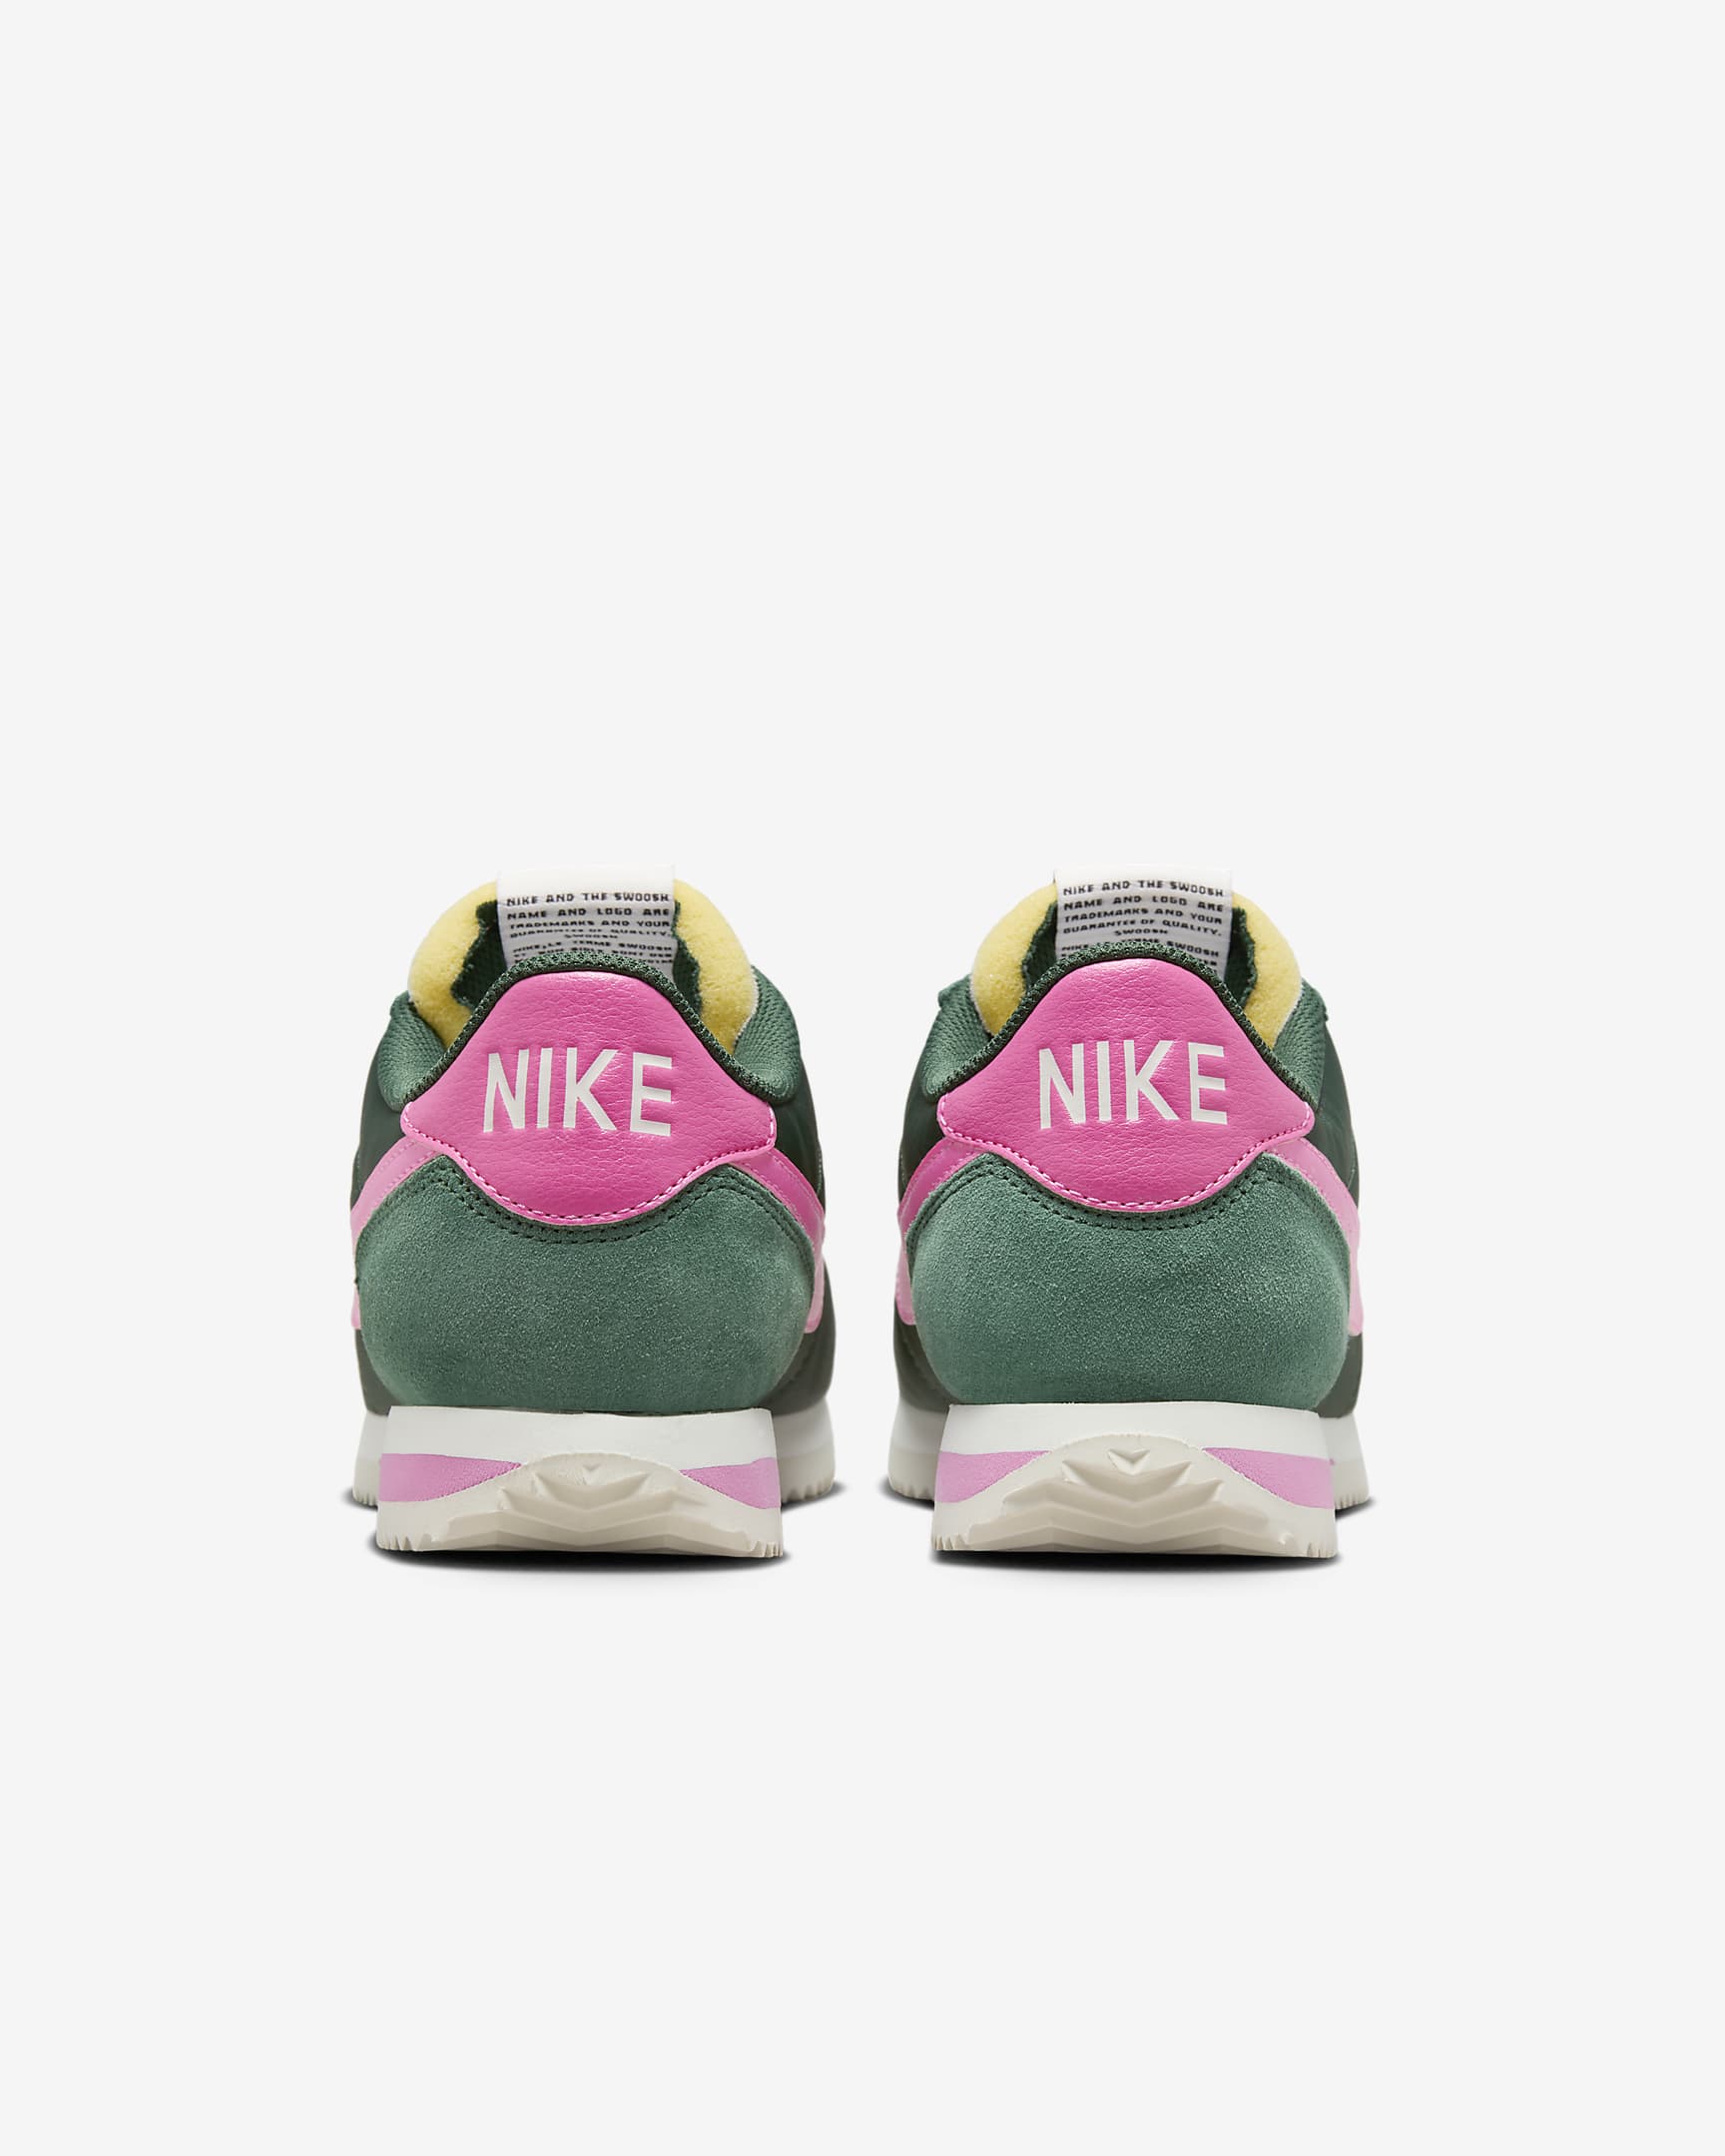 Nike Cortez Textile Shoes - Fir/Sail/Team Orange/Pinksicle